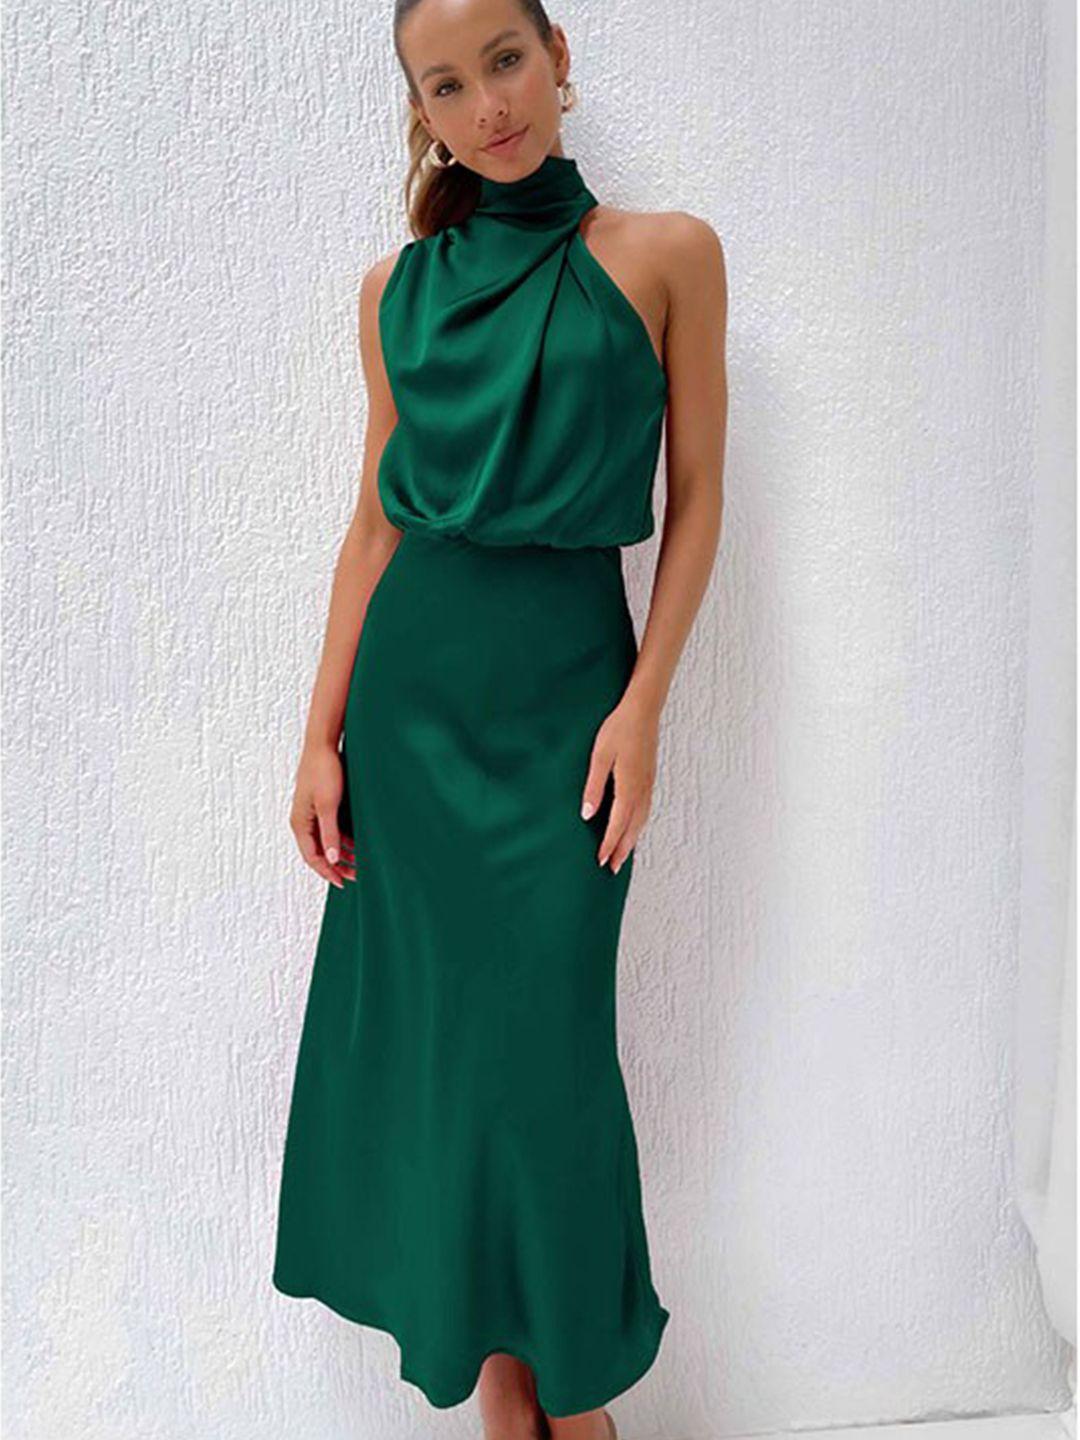 stylecast green high neck sleeveless maxi dress